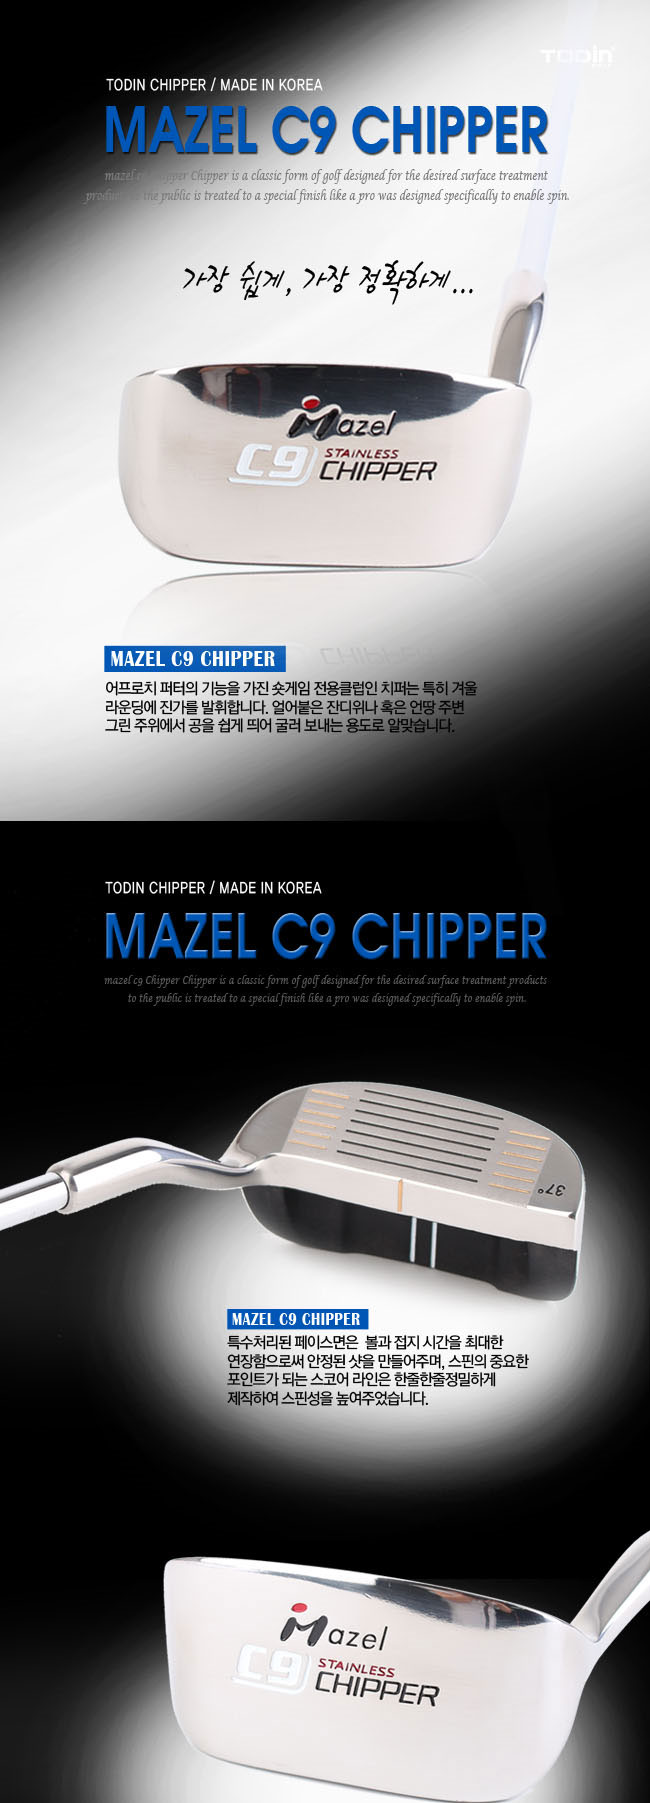 mazel-c9-chipper_01_172210.jpg